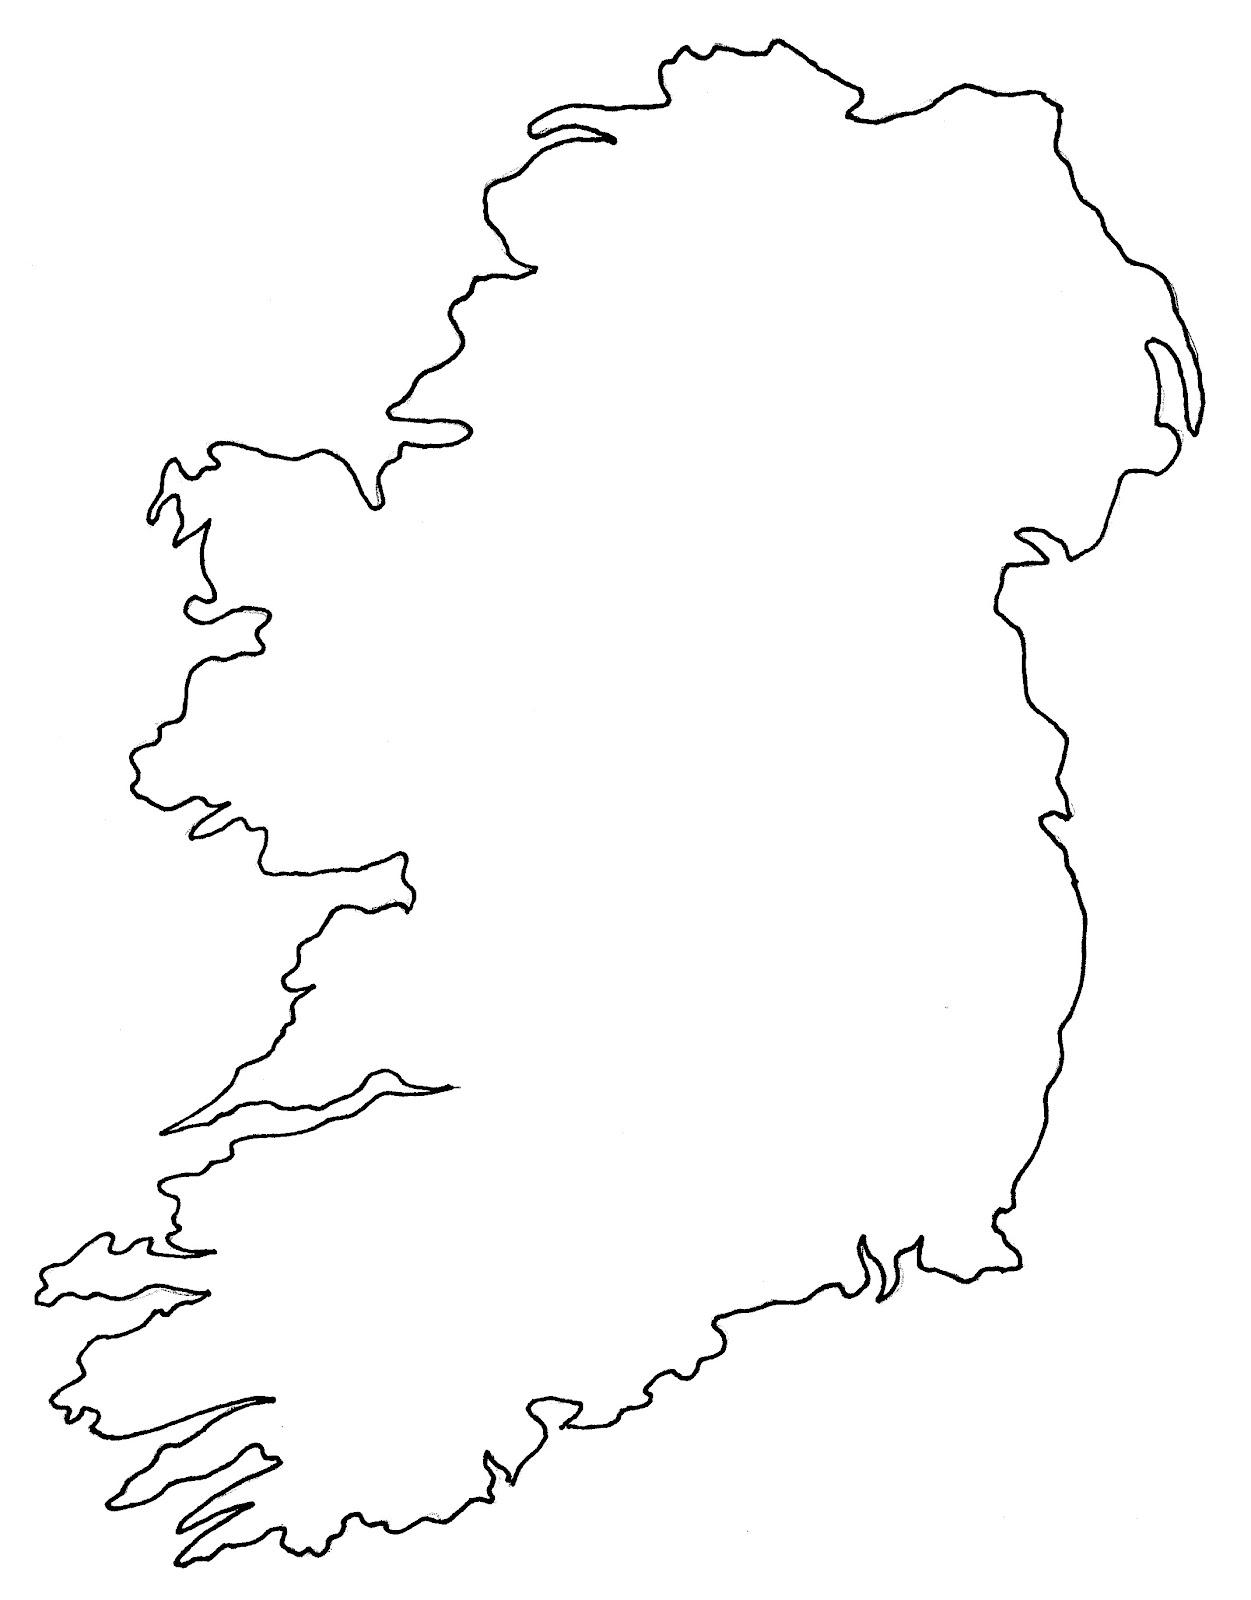 Outline of Ireland